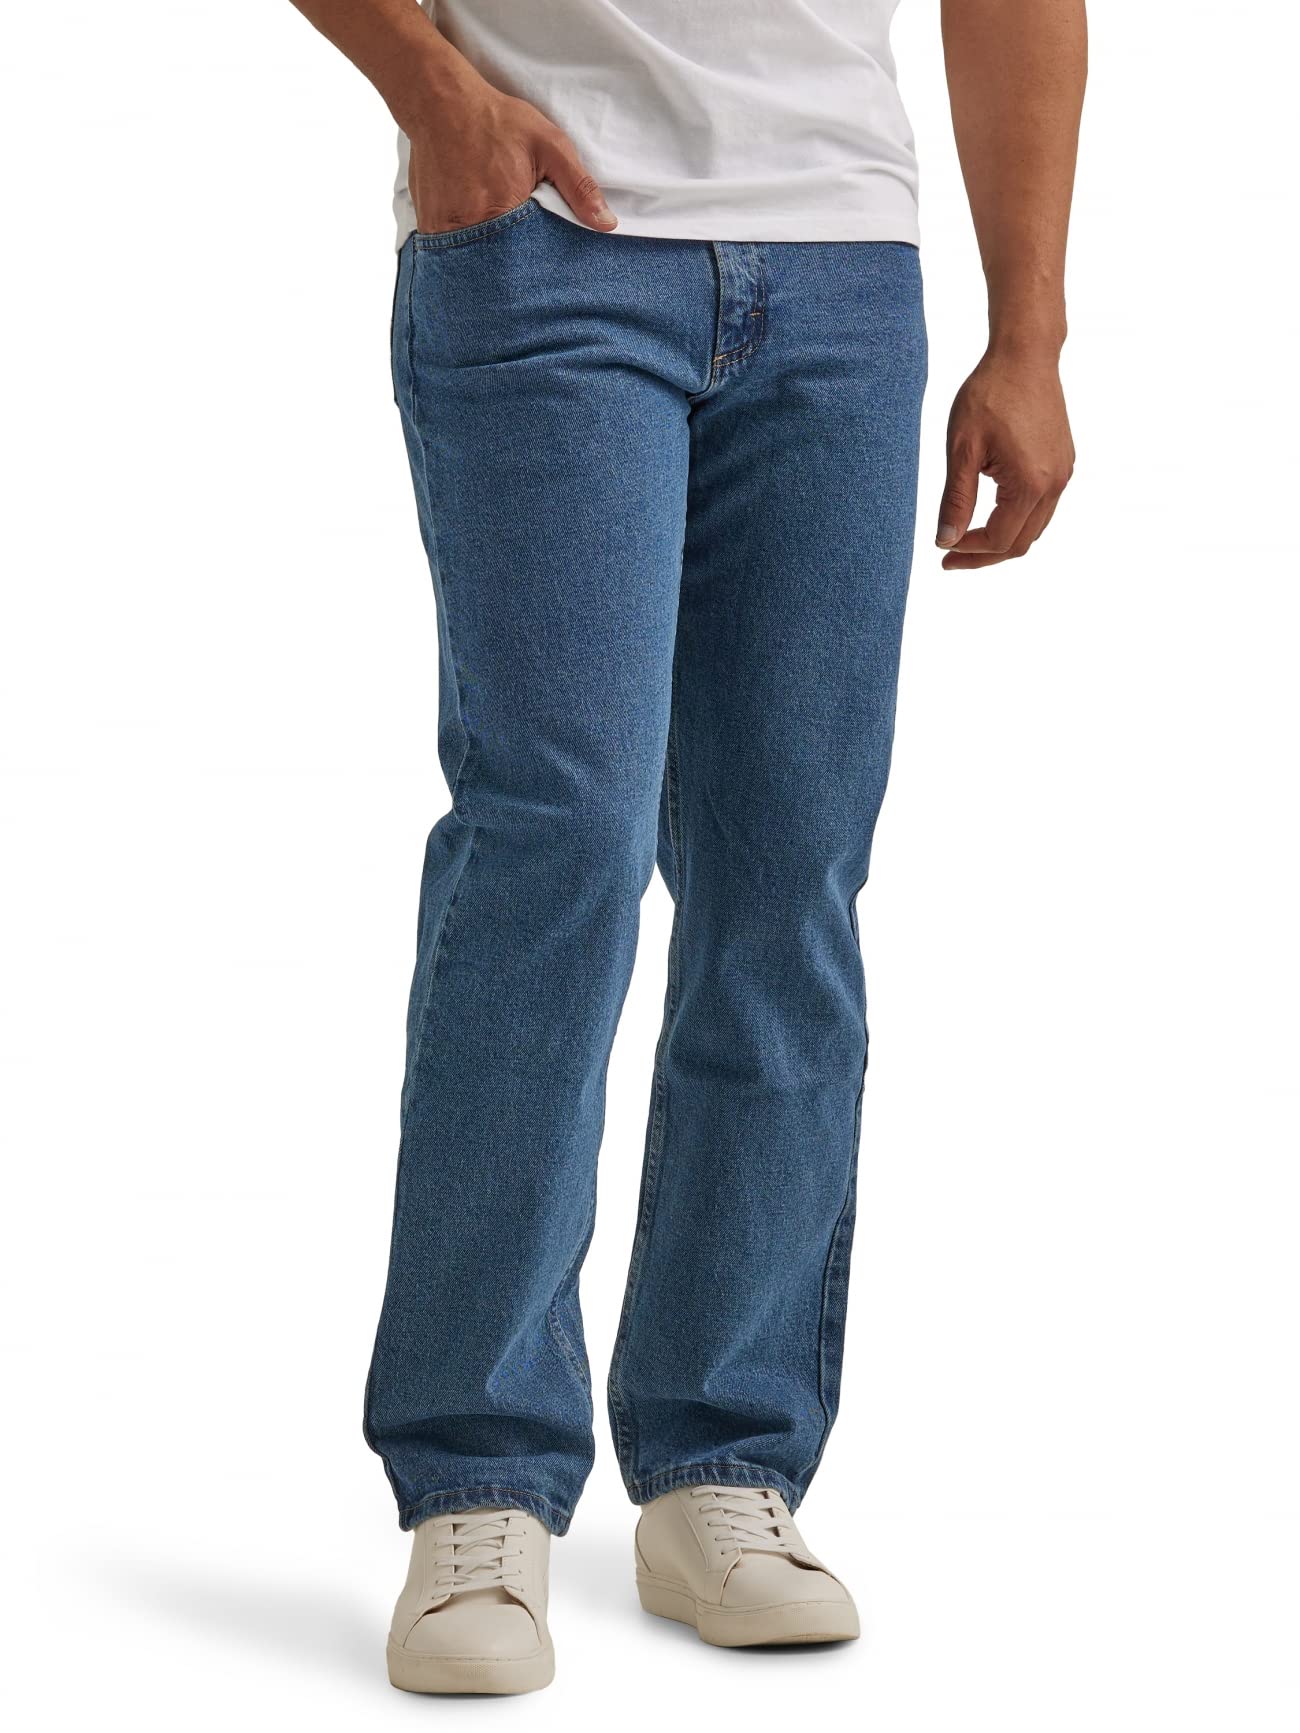 Wrangler Authentics Men's Classic 5-Pocket Relaxed Fit Jean, Dark Stonewash Flex, 38W x 28L